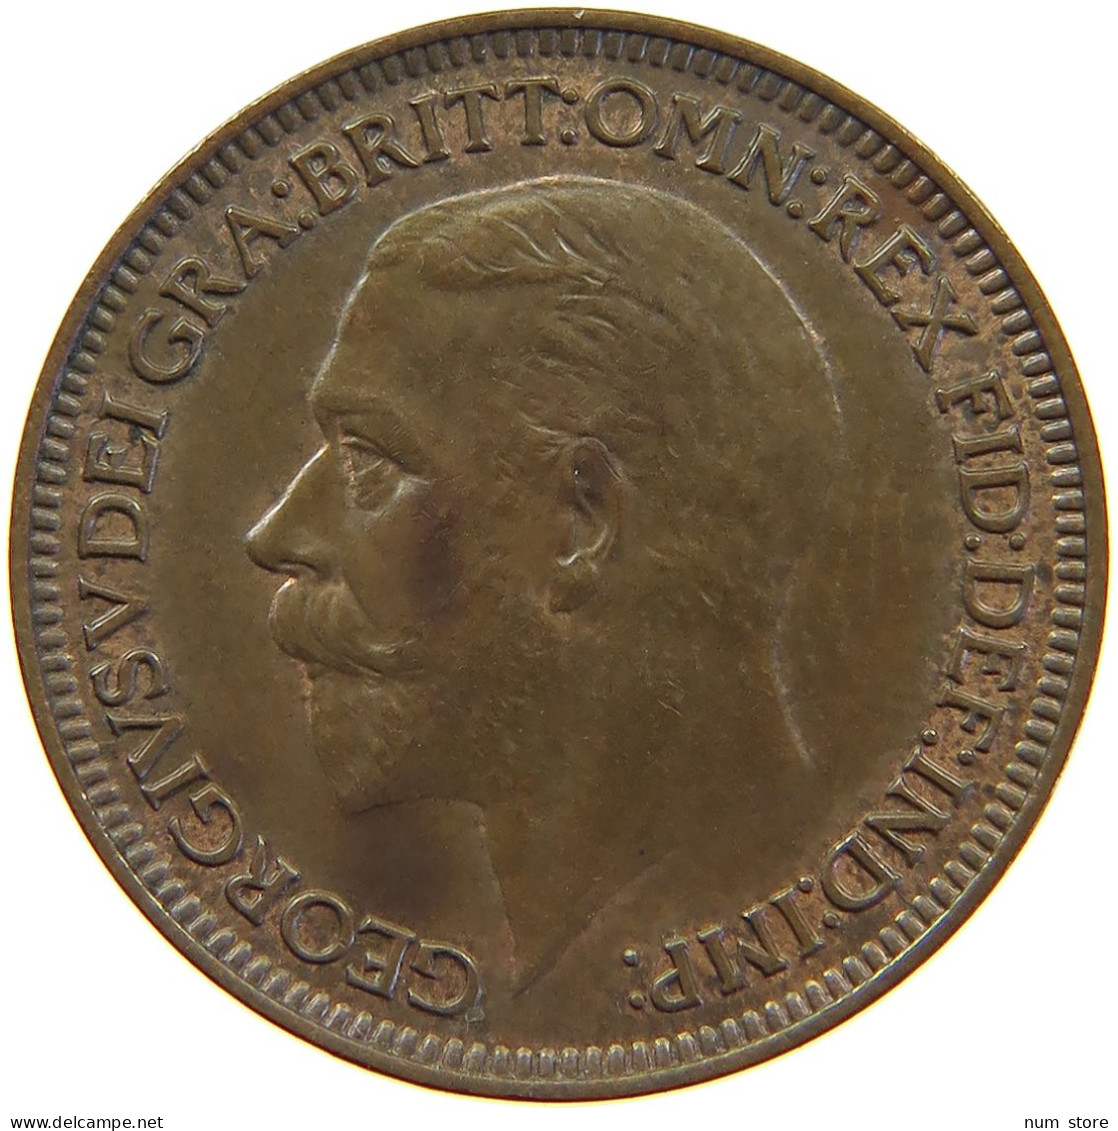 GREAT BRITAIN FARTHING 1935 George V. (1910-1936) #s010 0217 - B. 1 Farthing